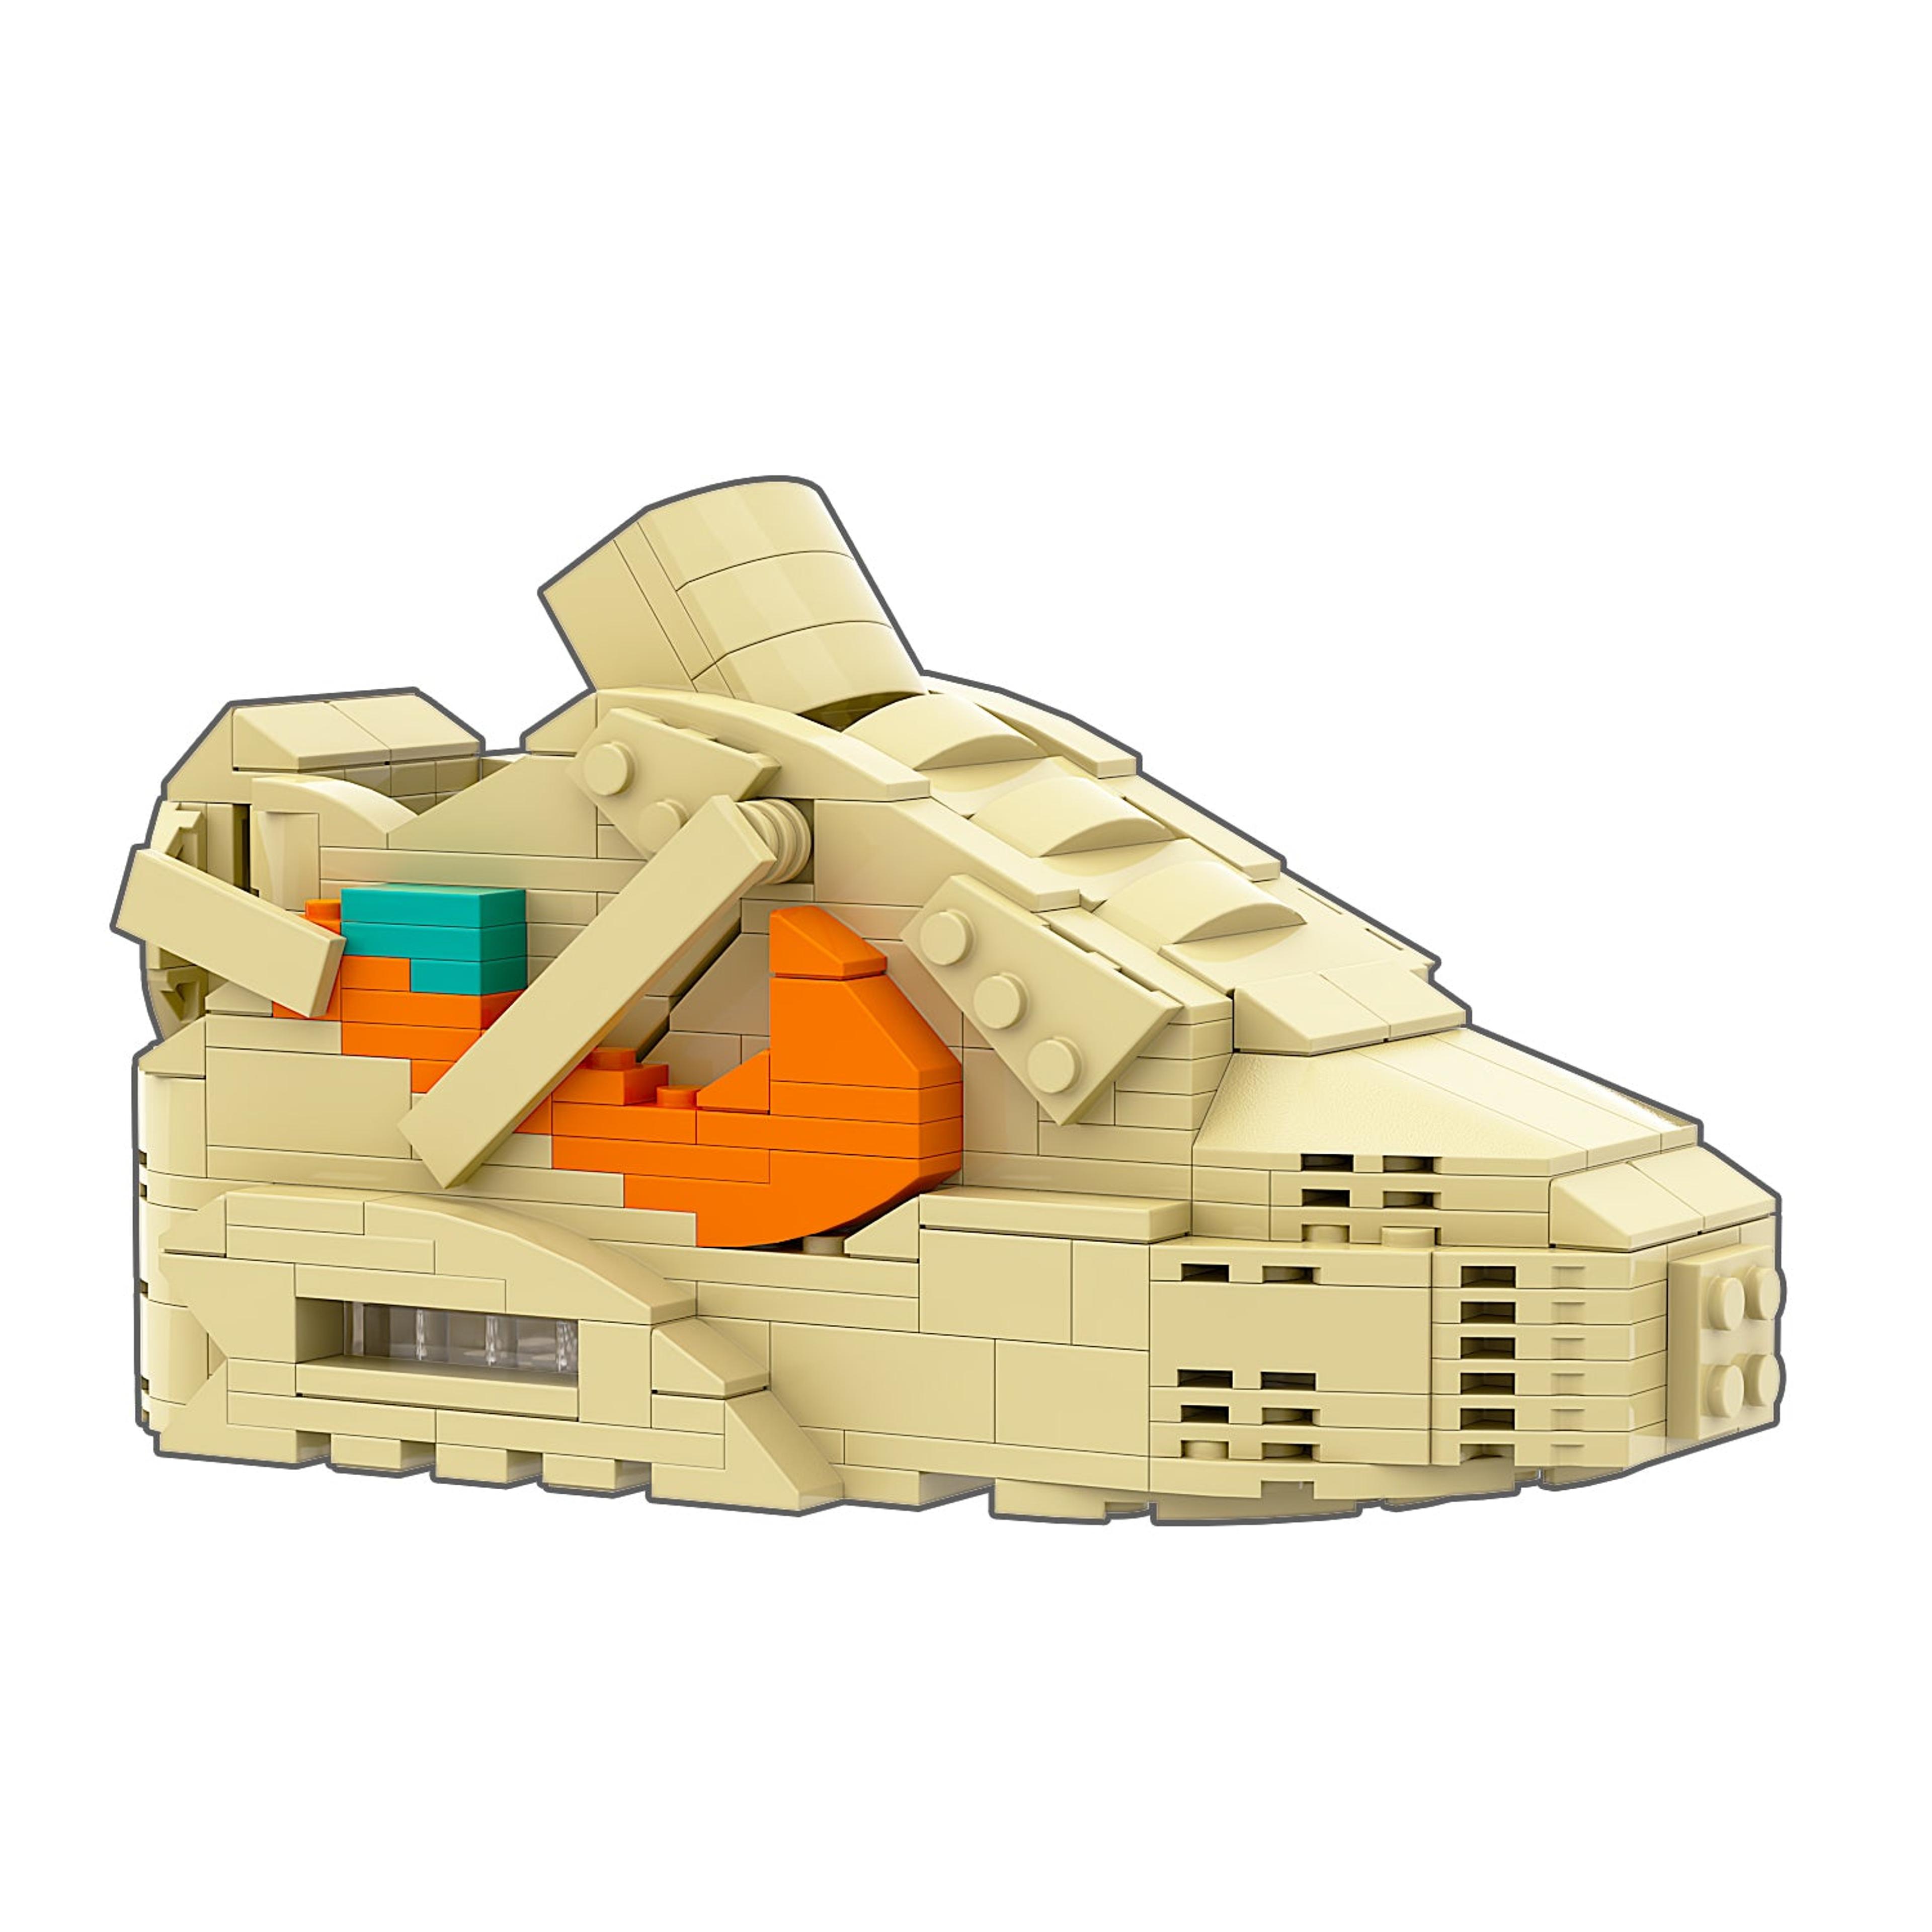 Alternate View 6 of REGULAR Air Max 90 "Desert Ore" Sneaker Bricks with Mini Figure